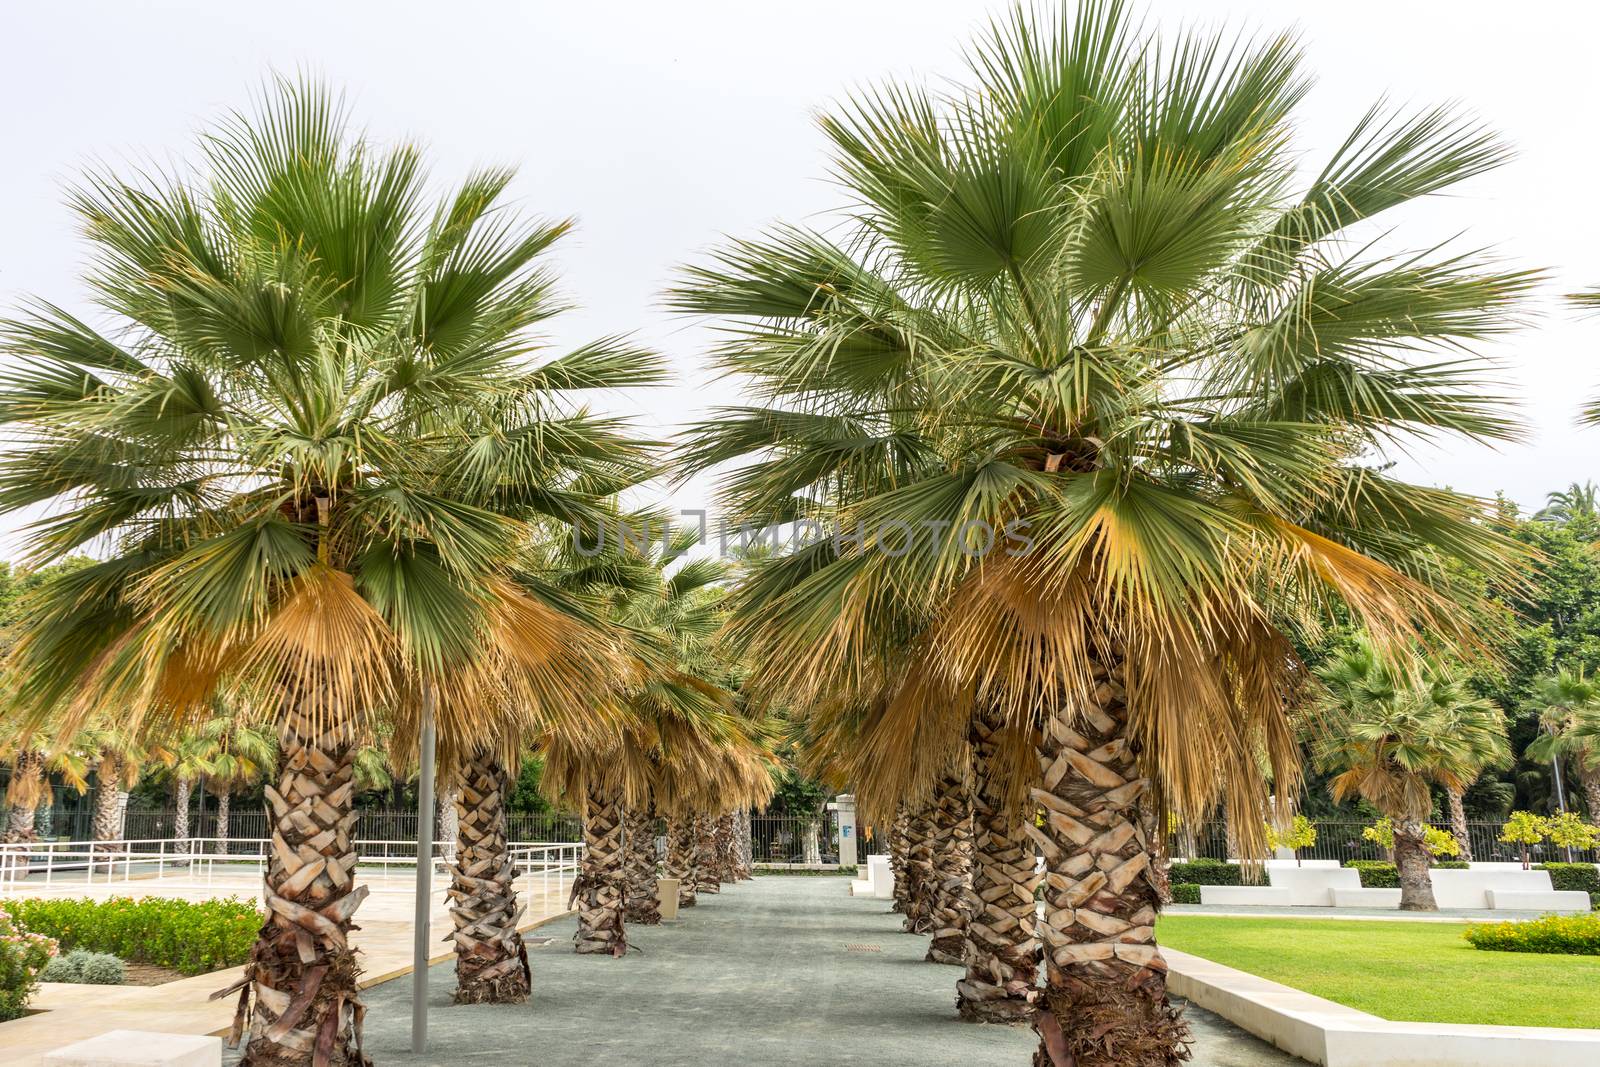 Palm trees along the Malagueta beach in Malaga, Spain, Europe by ramana16